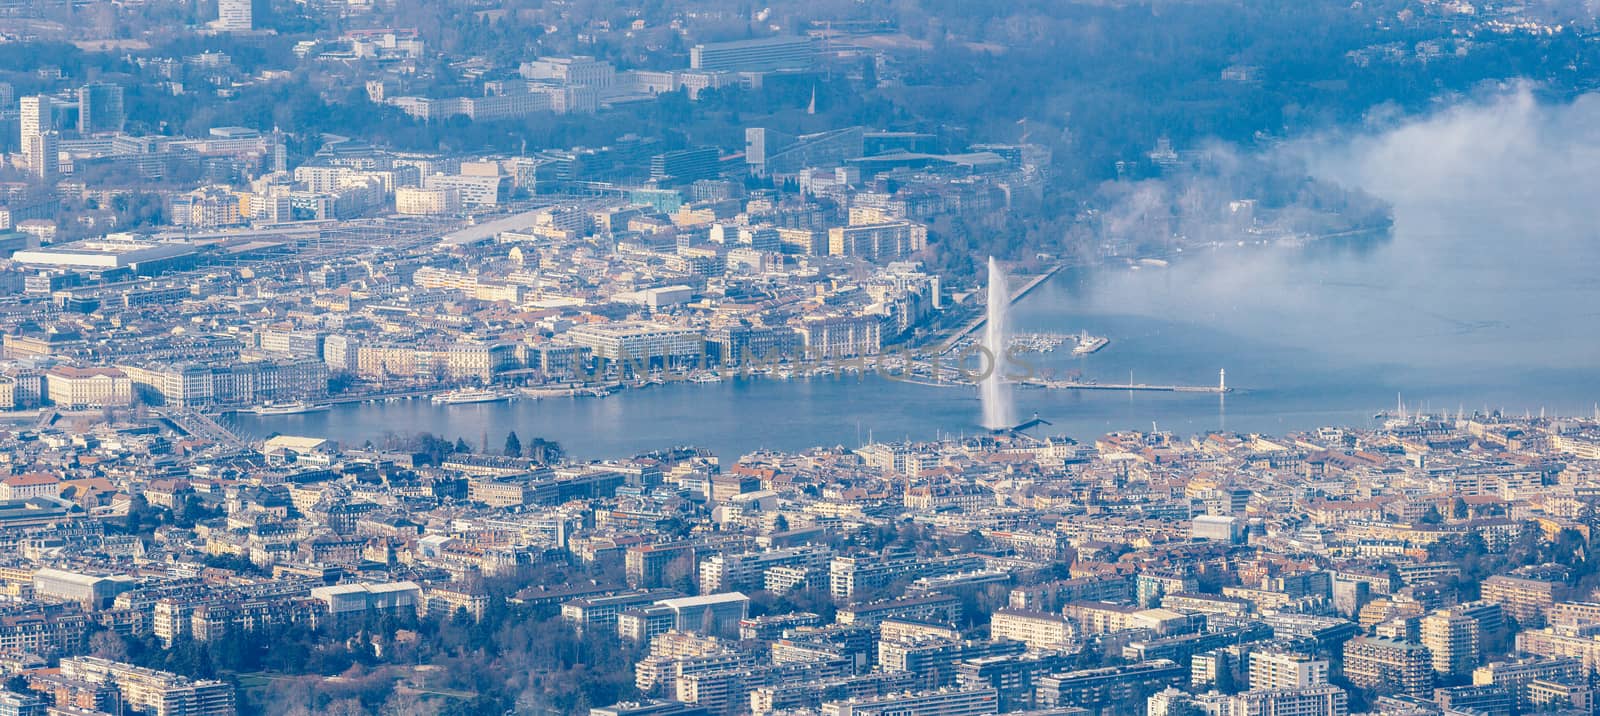 Aerial view of Geneva city center and lake Geneva.